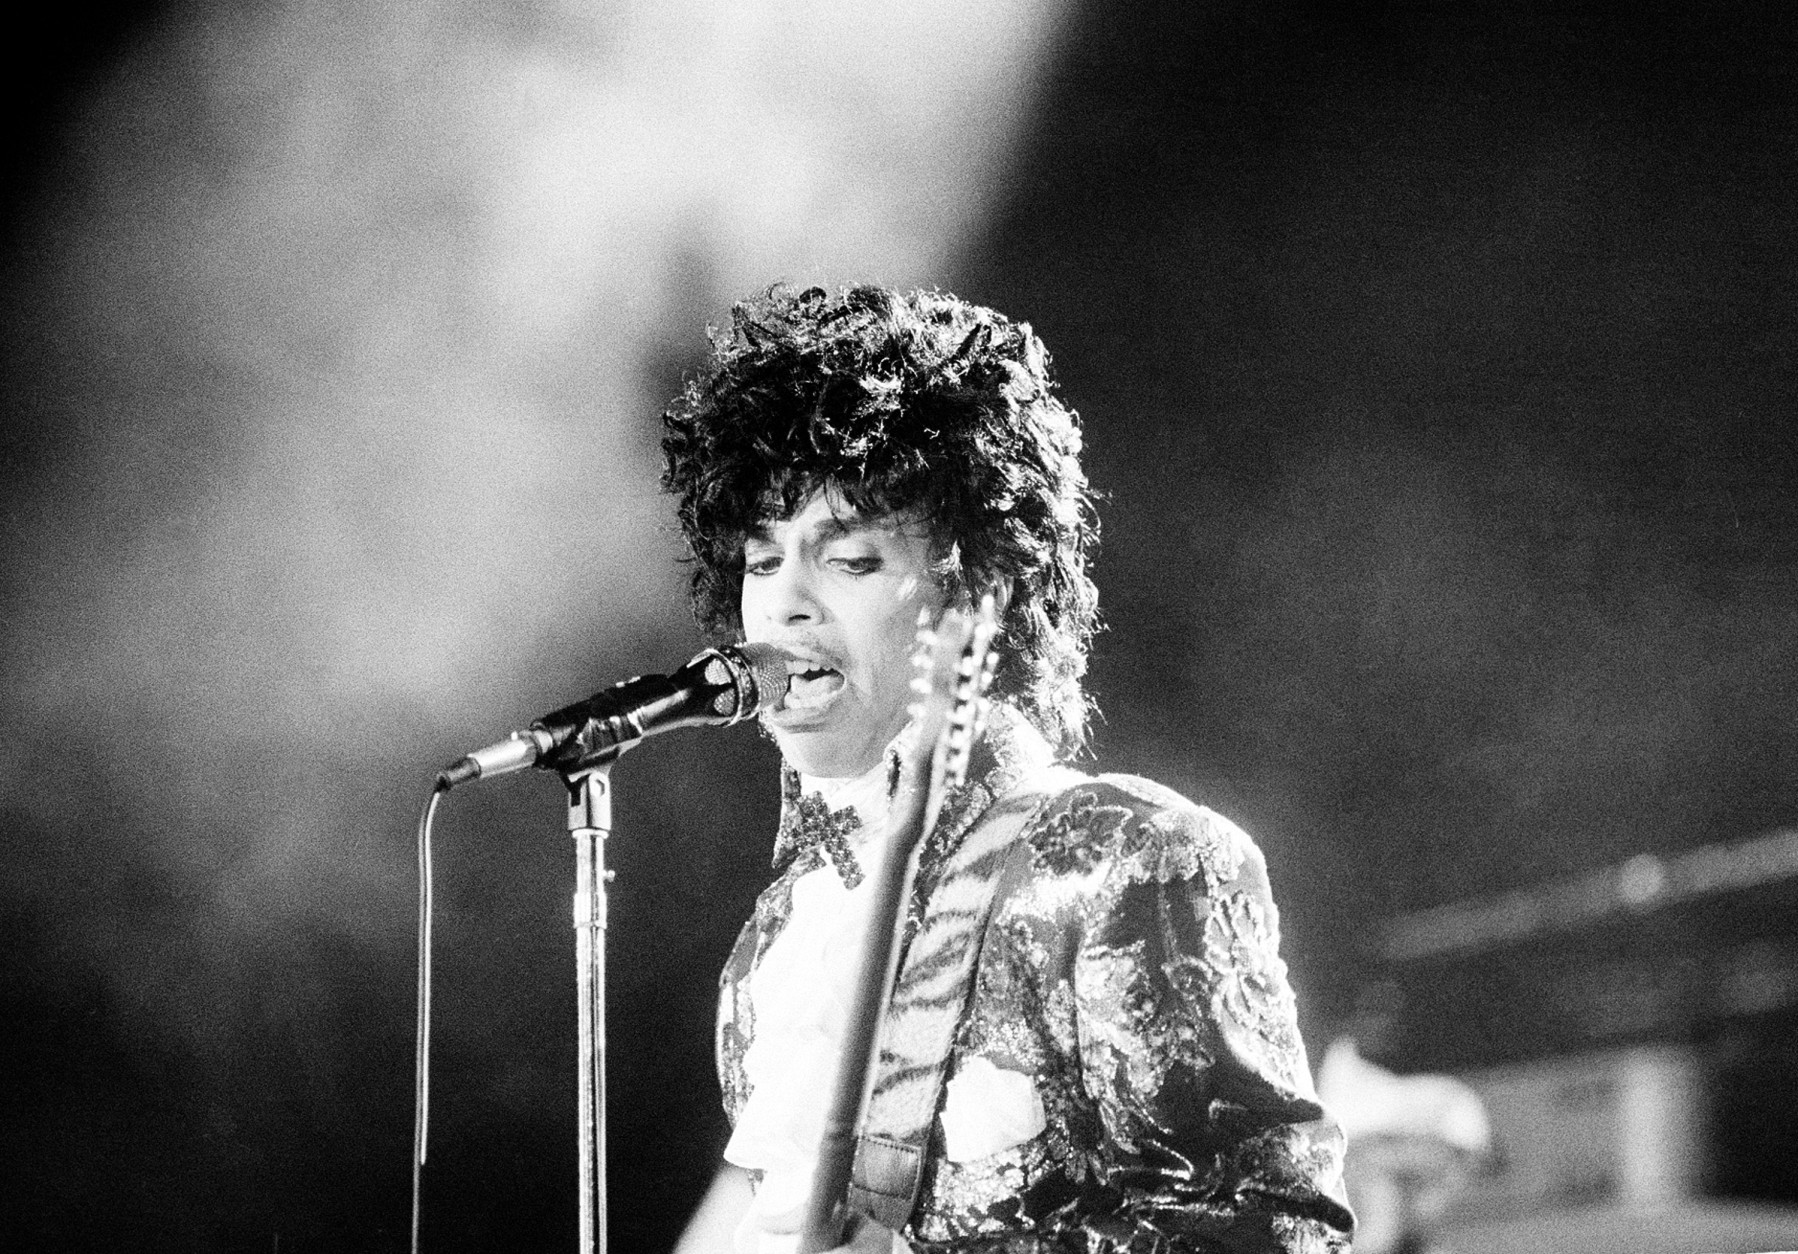 Rock singer Prince performs at the Orange Bowl during his Purple Rain tour in Miami, Fla., April 7, 1985.  (AP Photo/Phil Sandlin)